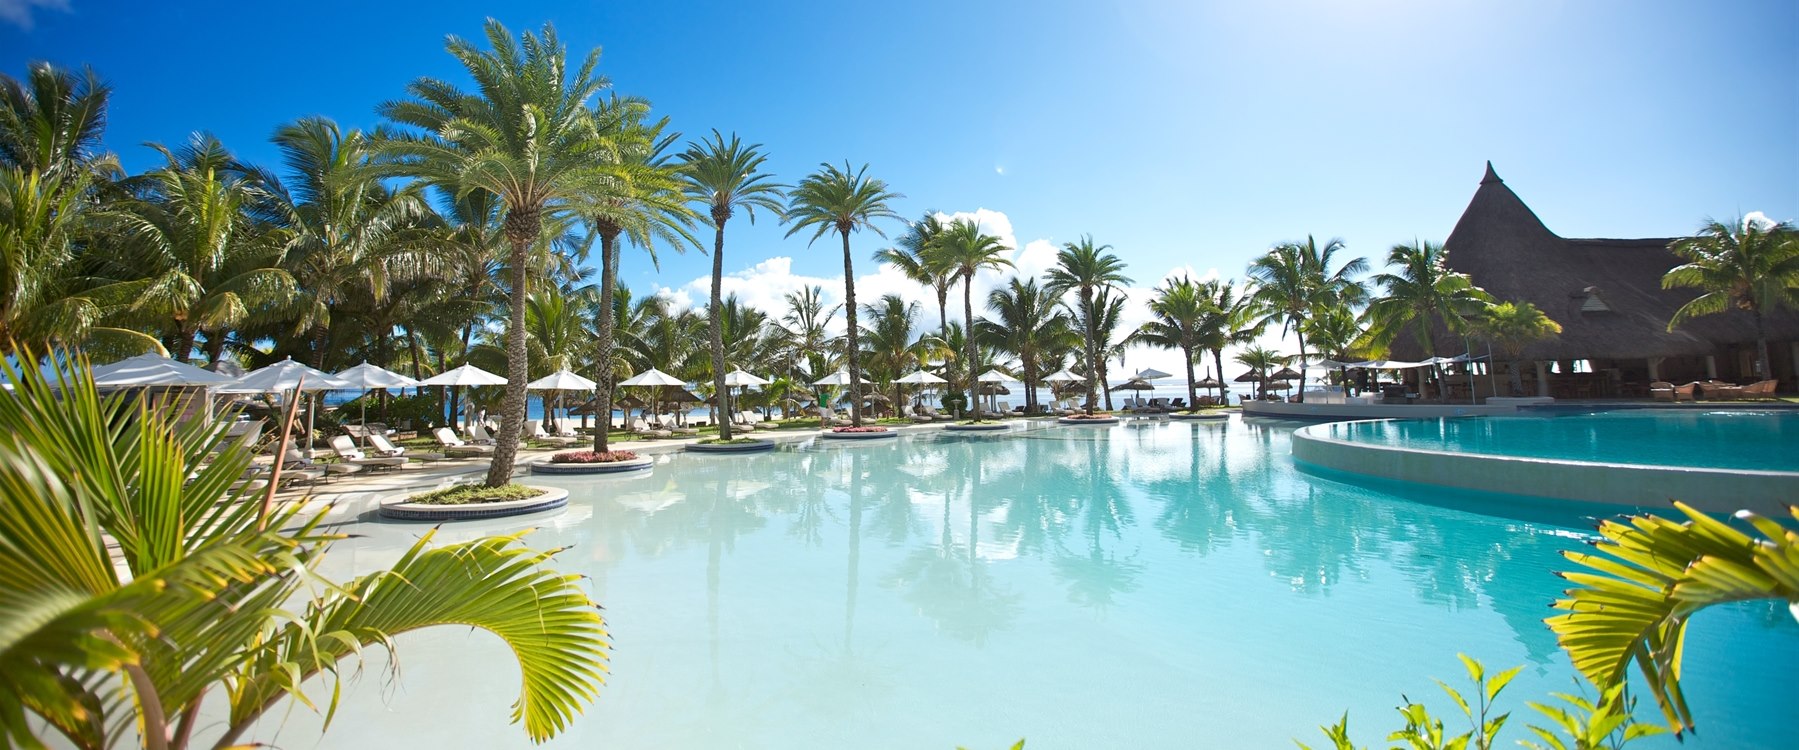 LUX* Belle Mare Villas - Mauritius Luxury Villa Holidays